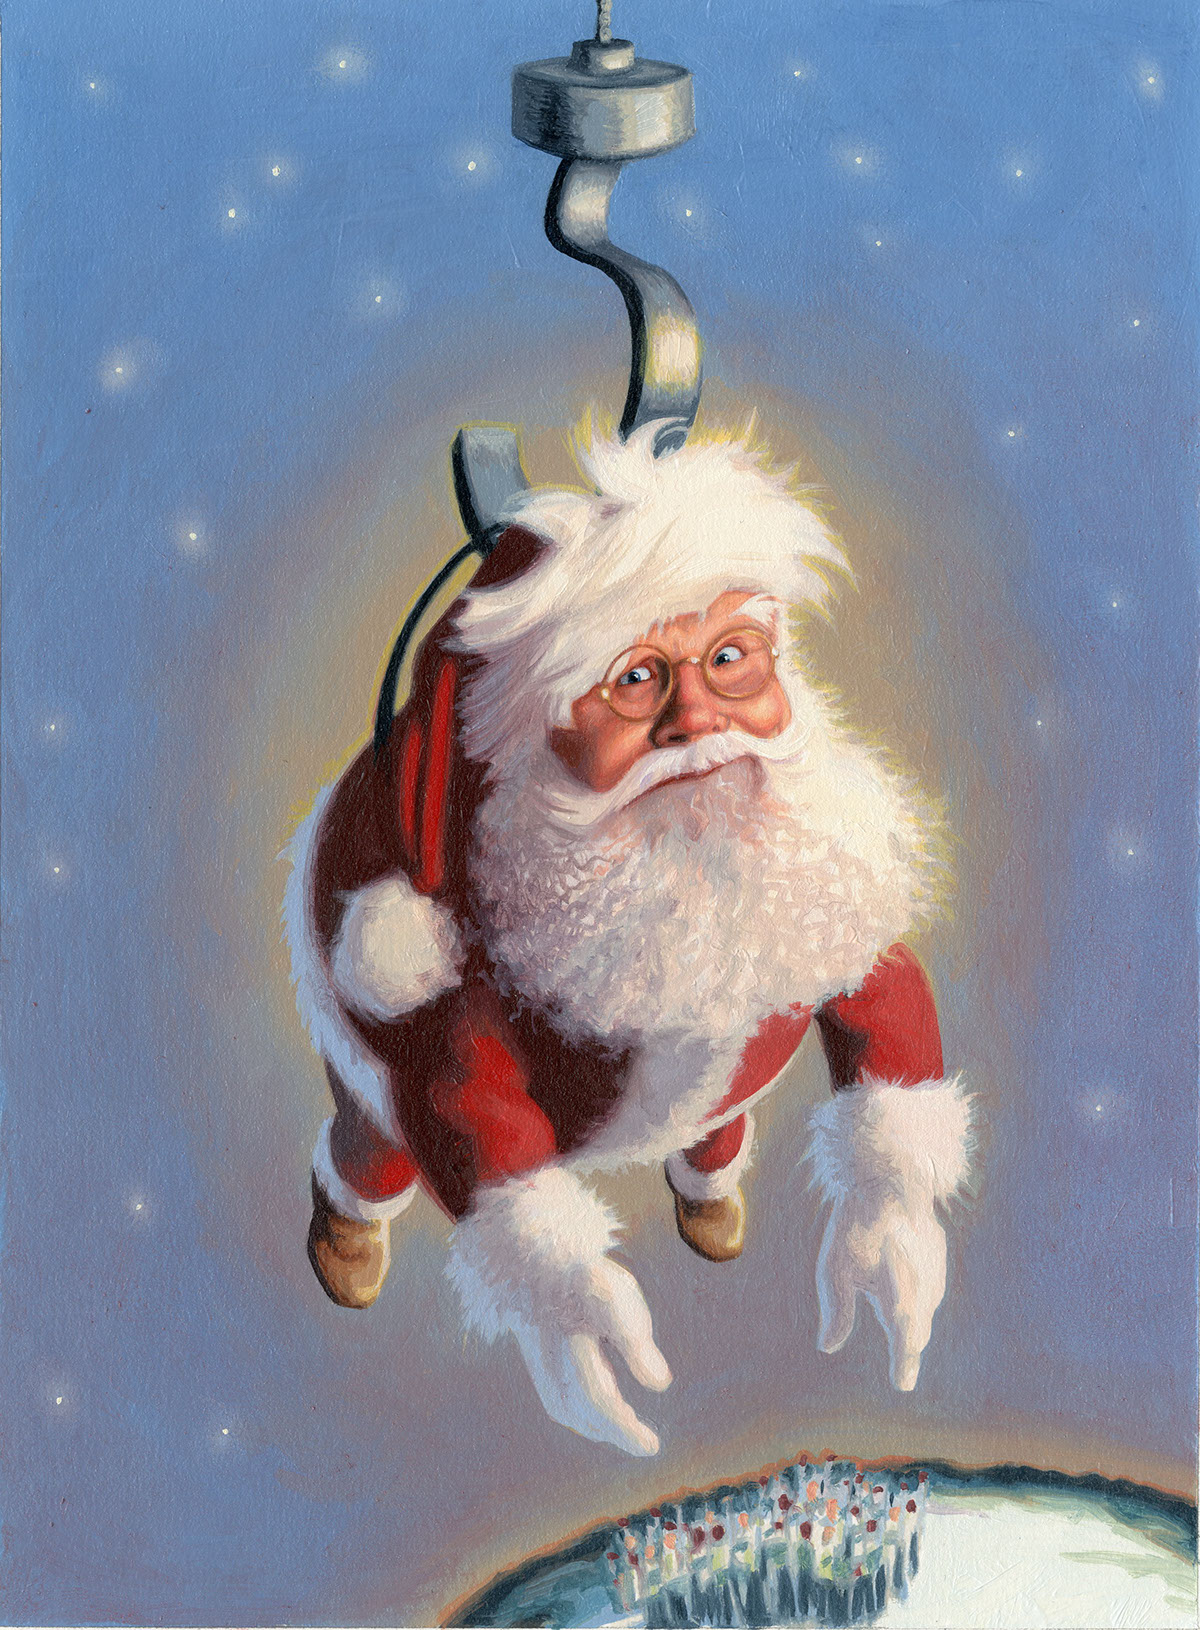 Christmas Gingerbread Santa Claus elf holidays